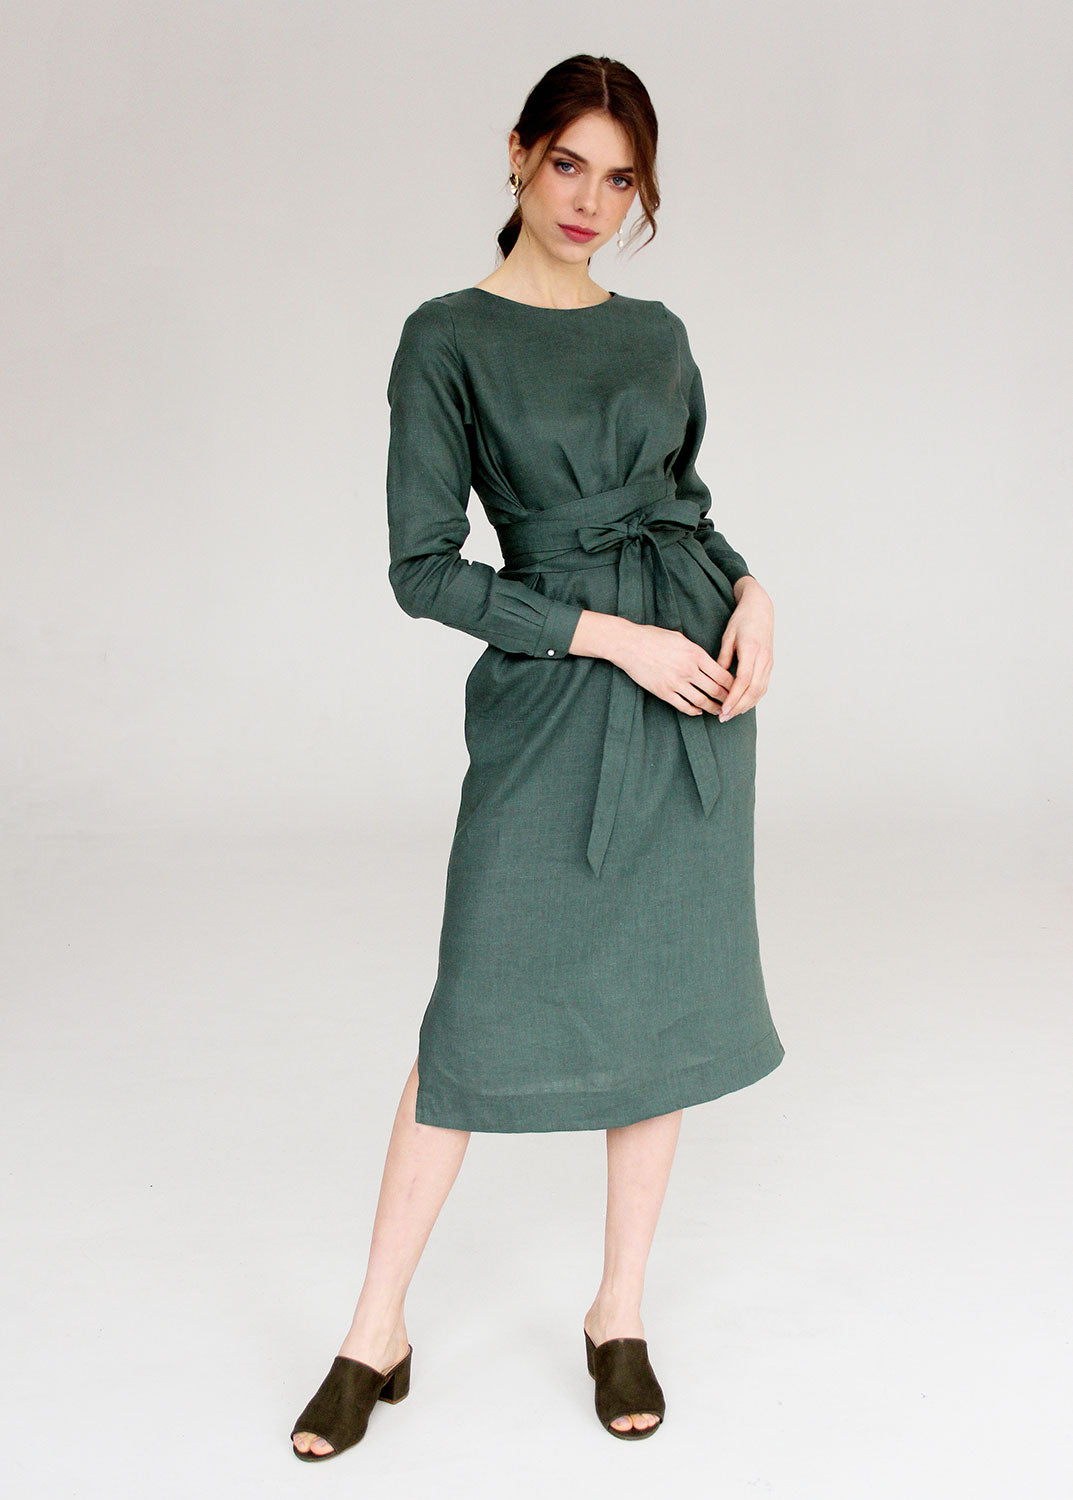 XS/M size "Audrey" Sage Green Linen Dress